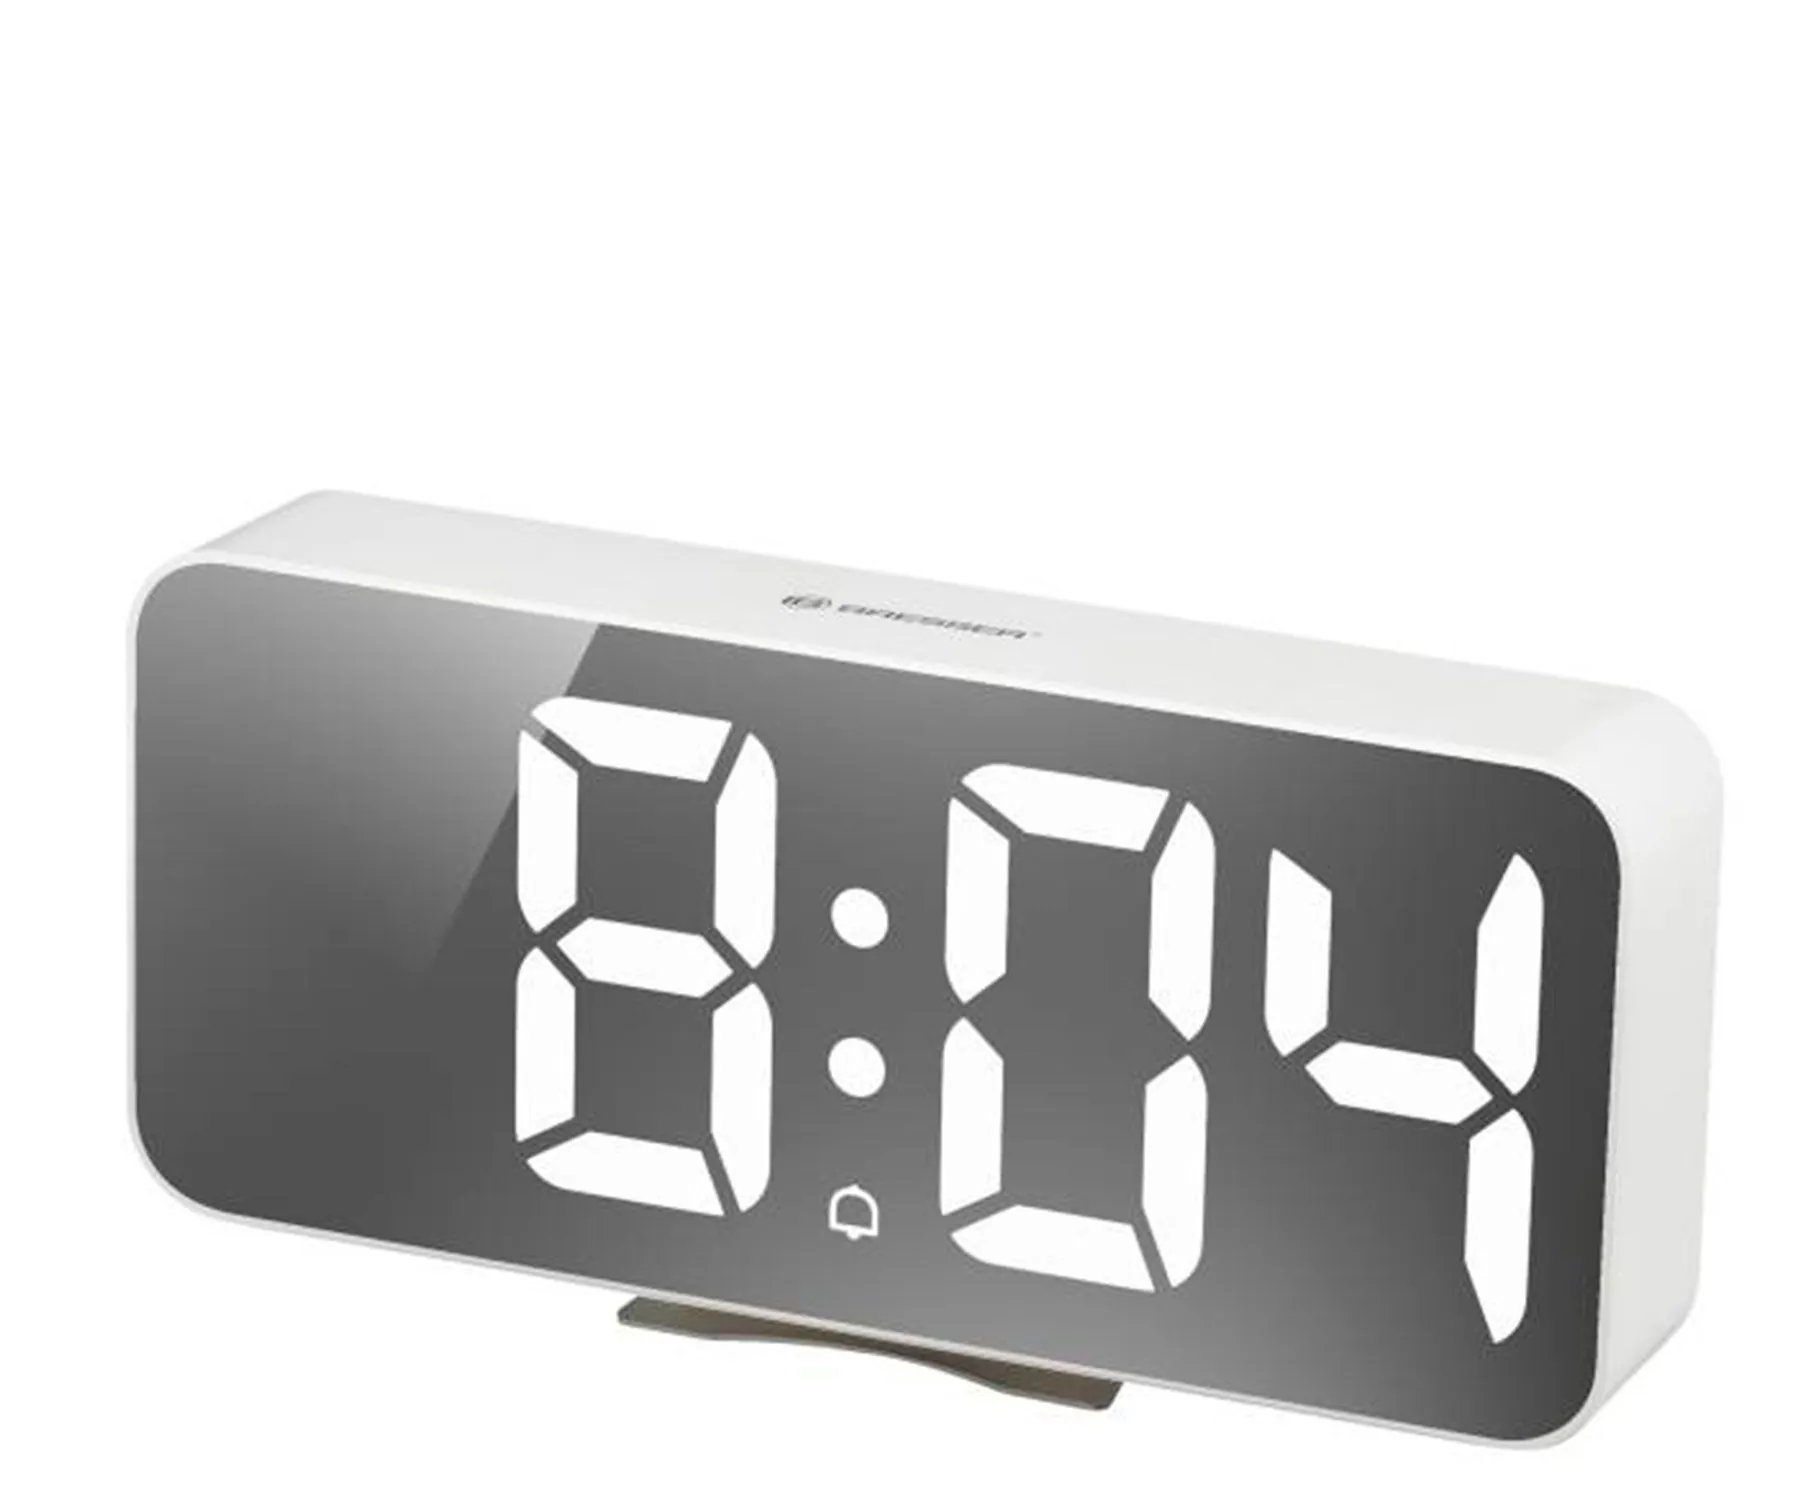 Bresser Mytime Echo FXL Blanco / Reloj despertador / Termómetro